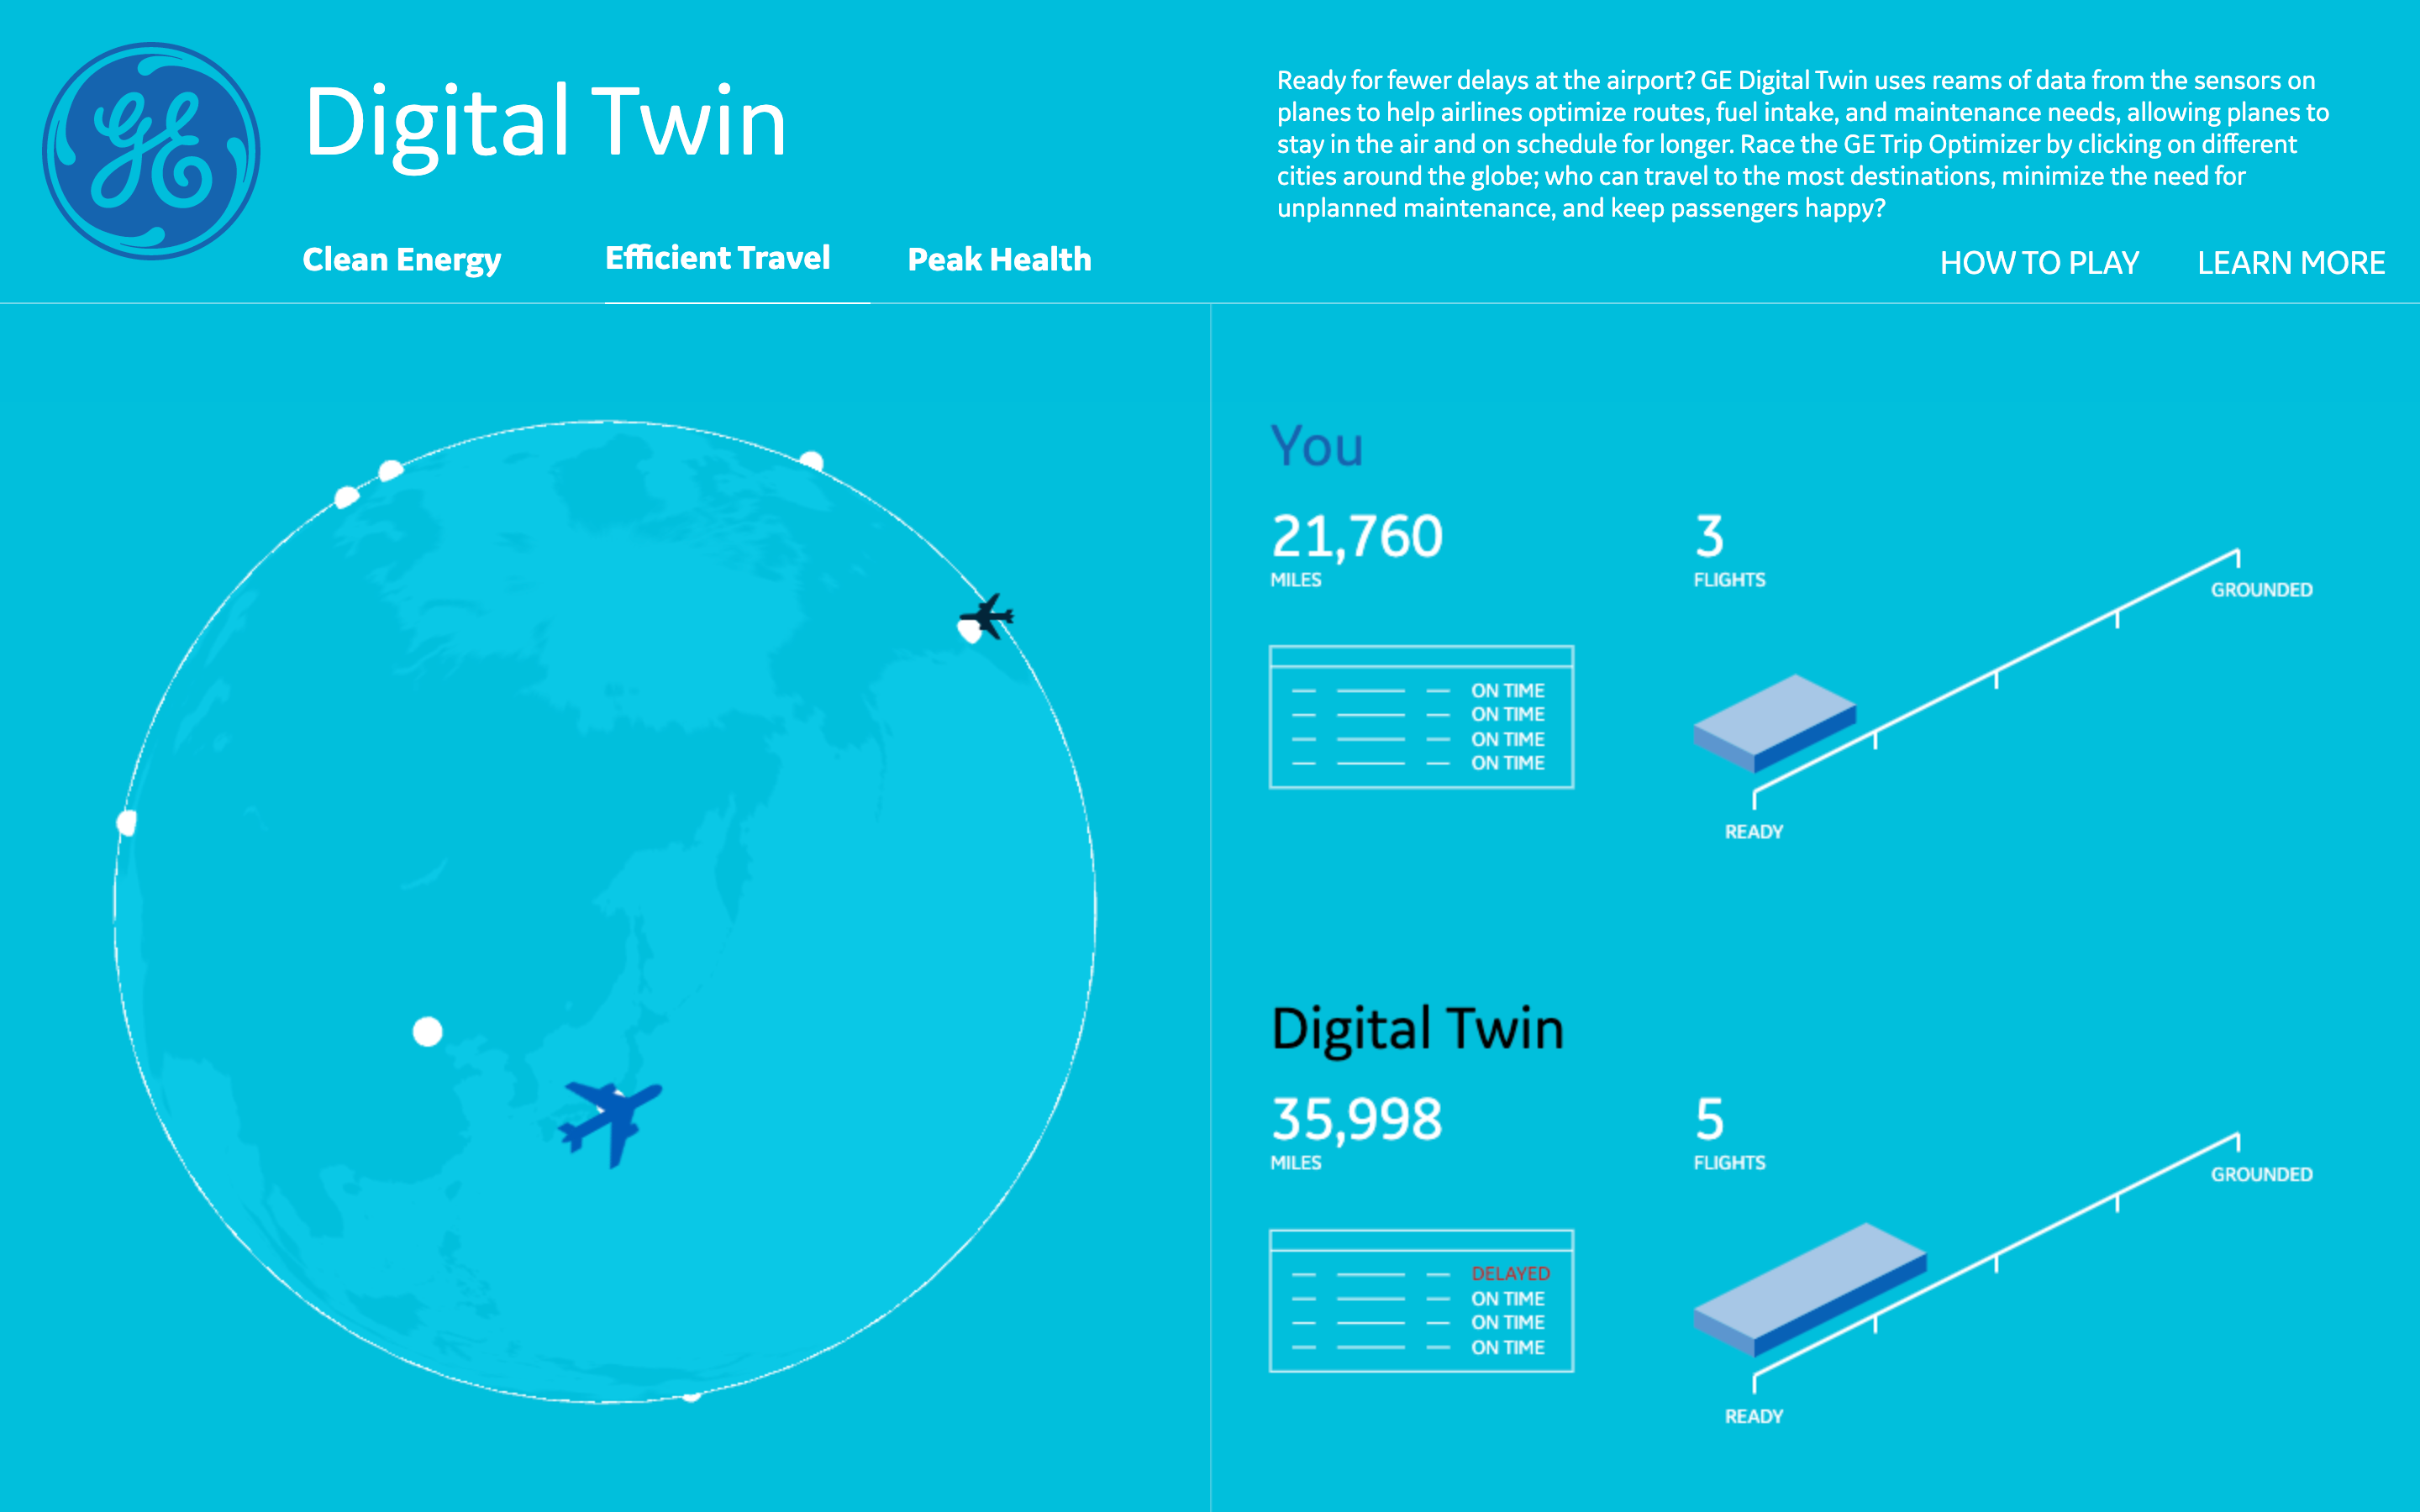 Digital Twin Simulation: Efficient Travel